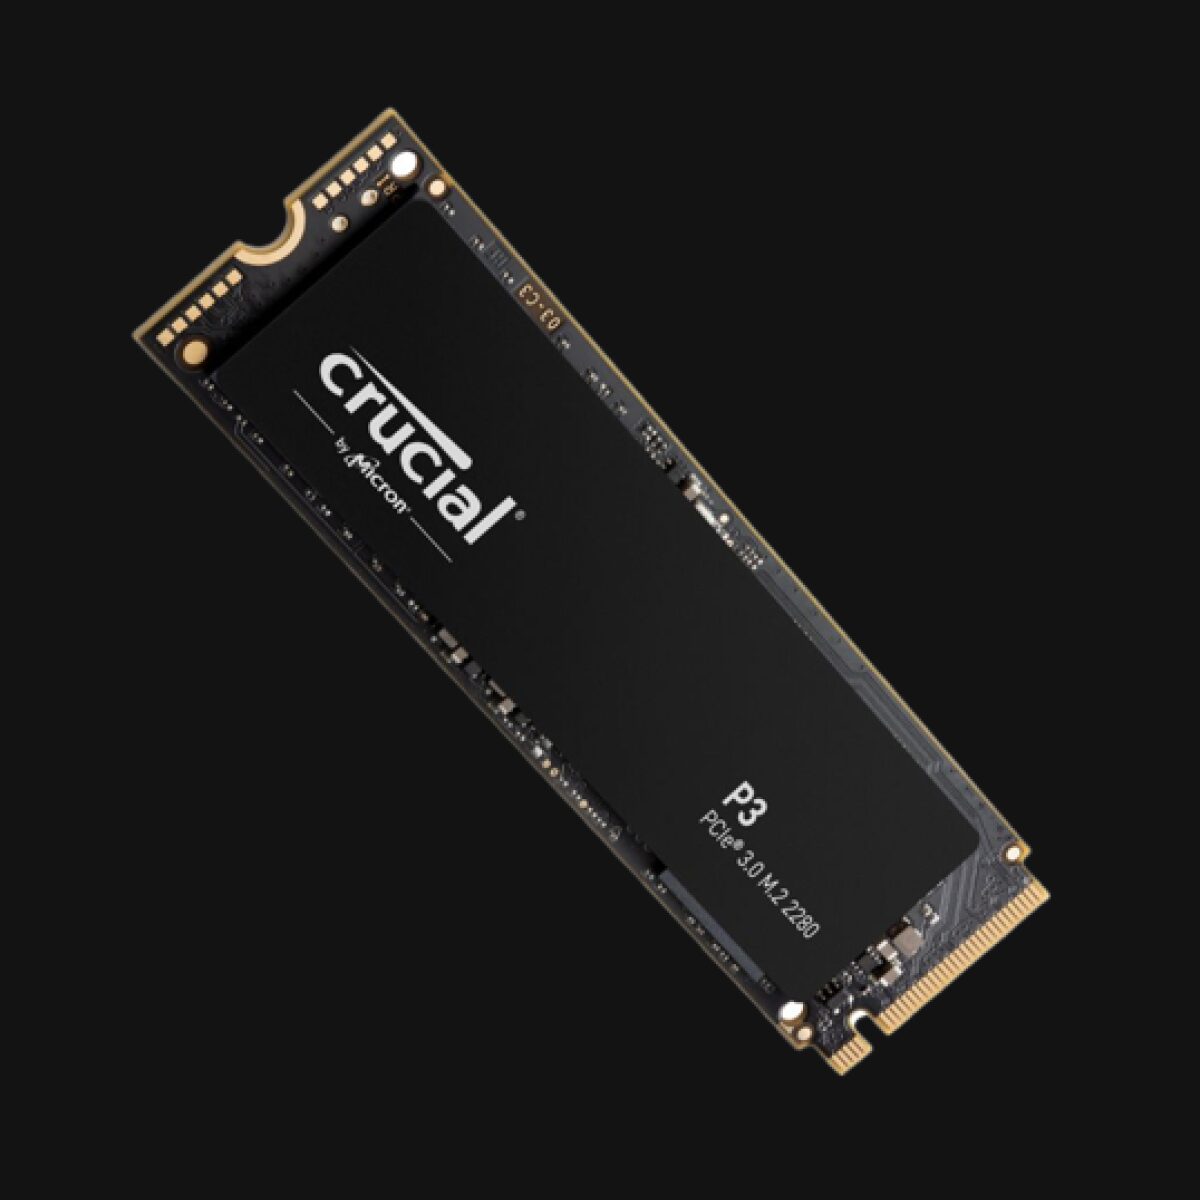 Crucial P3 - SSD - 1 TB - PCIe 3.0 (NVMe)